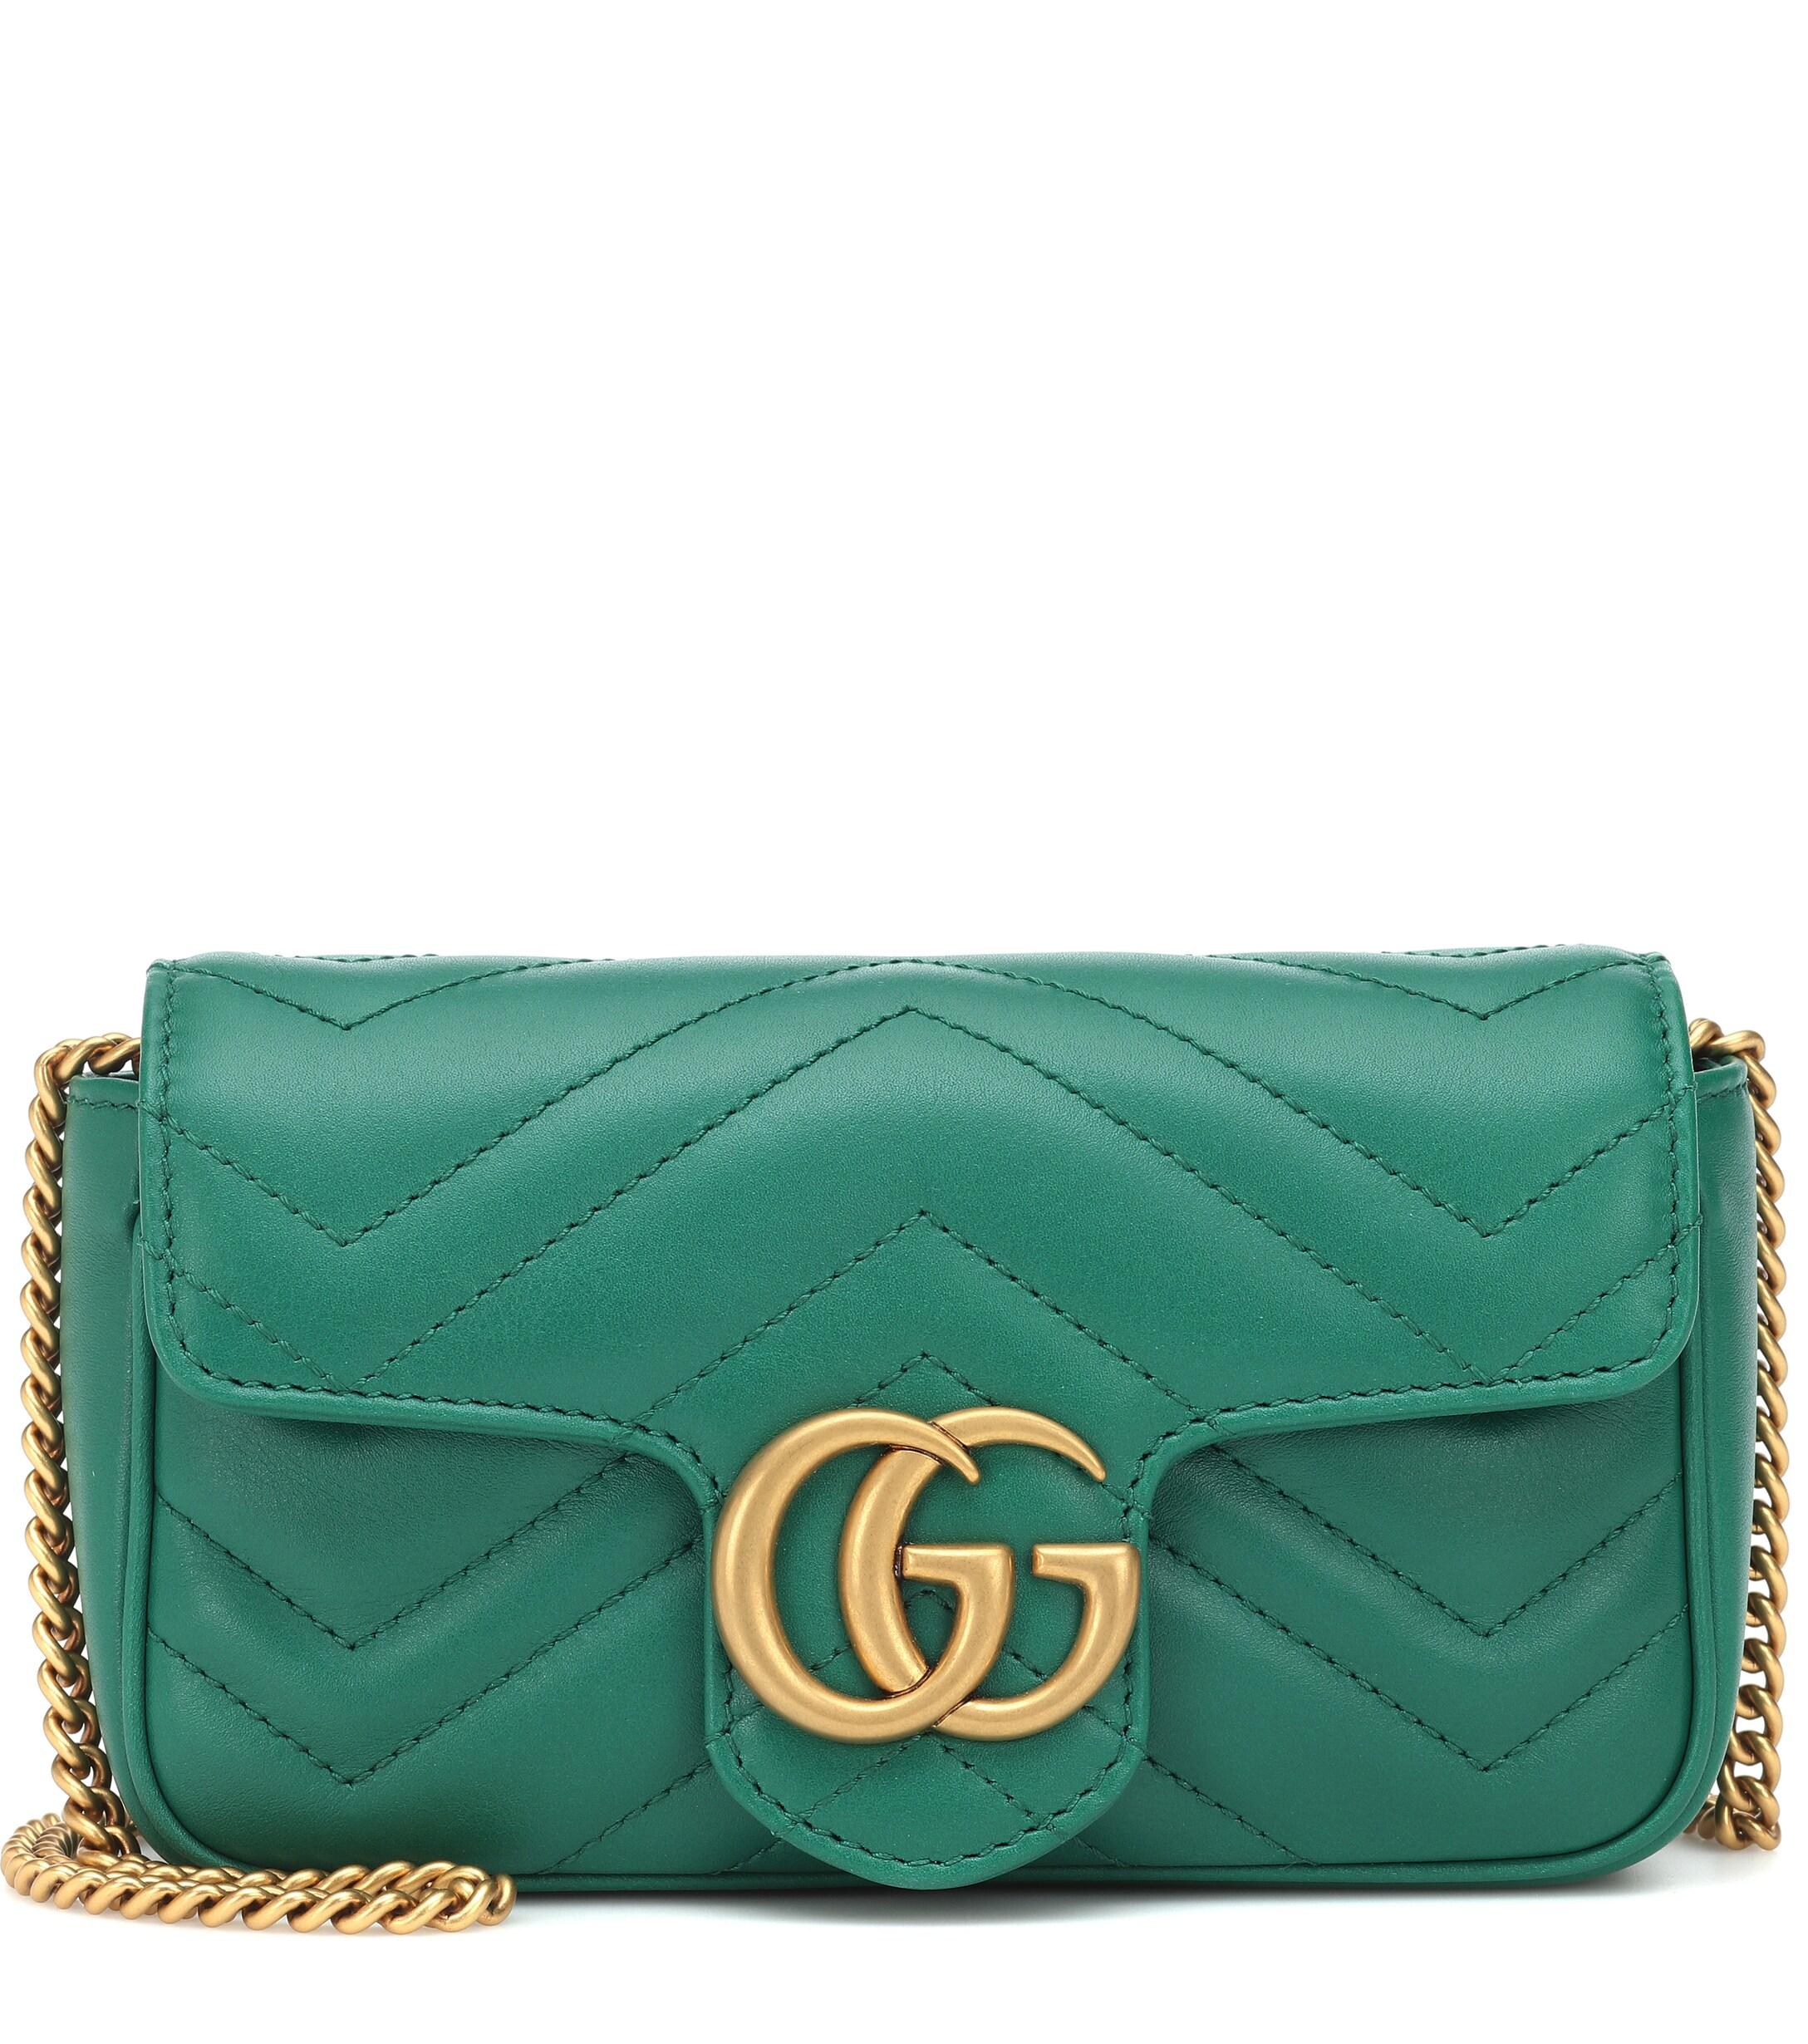 Gucci GG Marmont Super Mini Shoulder Bag in Green - Lyst